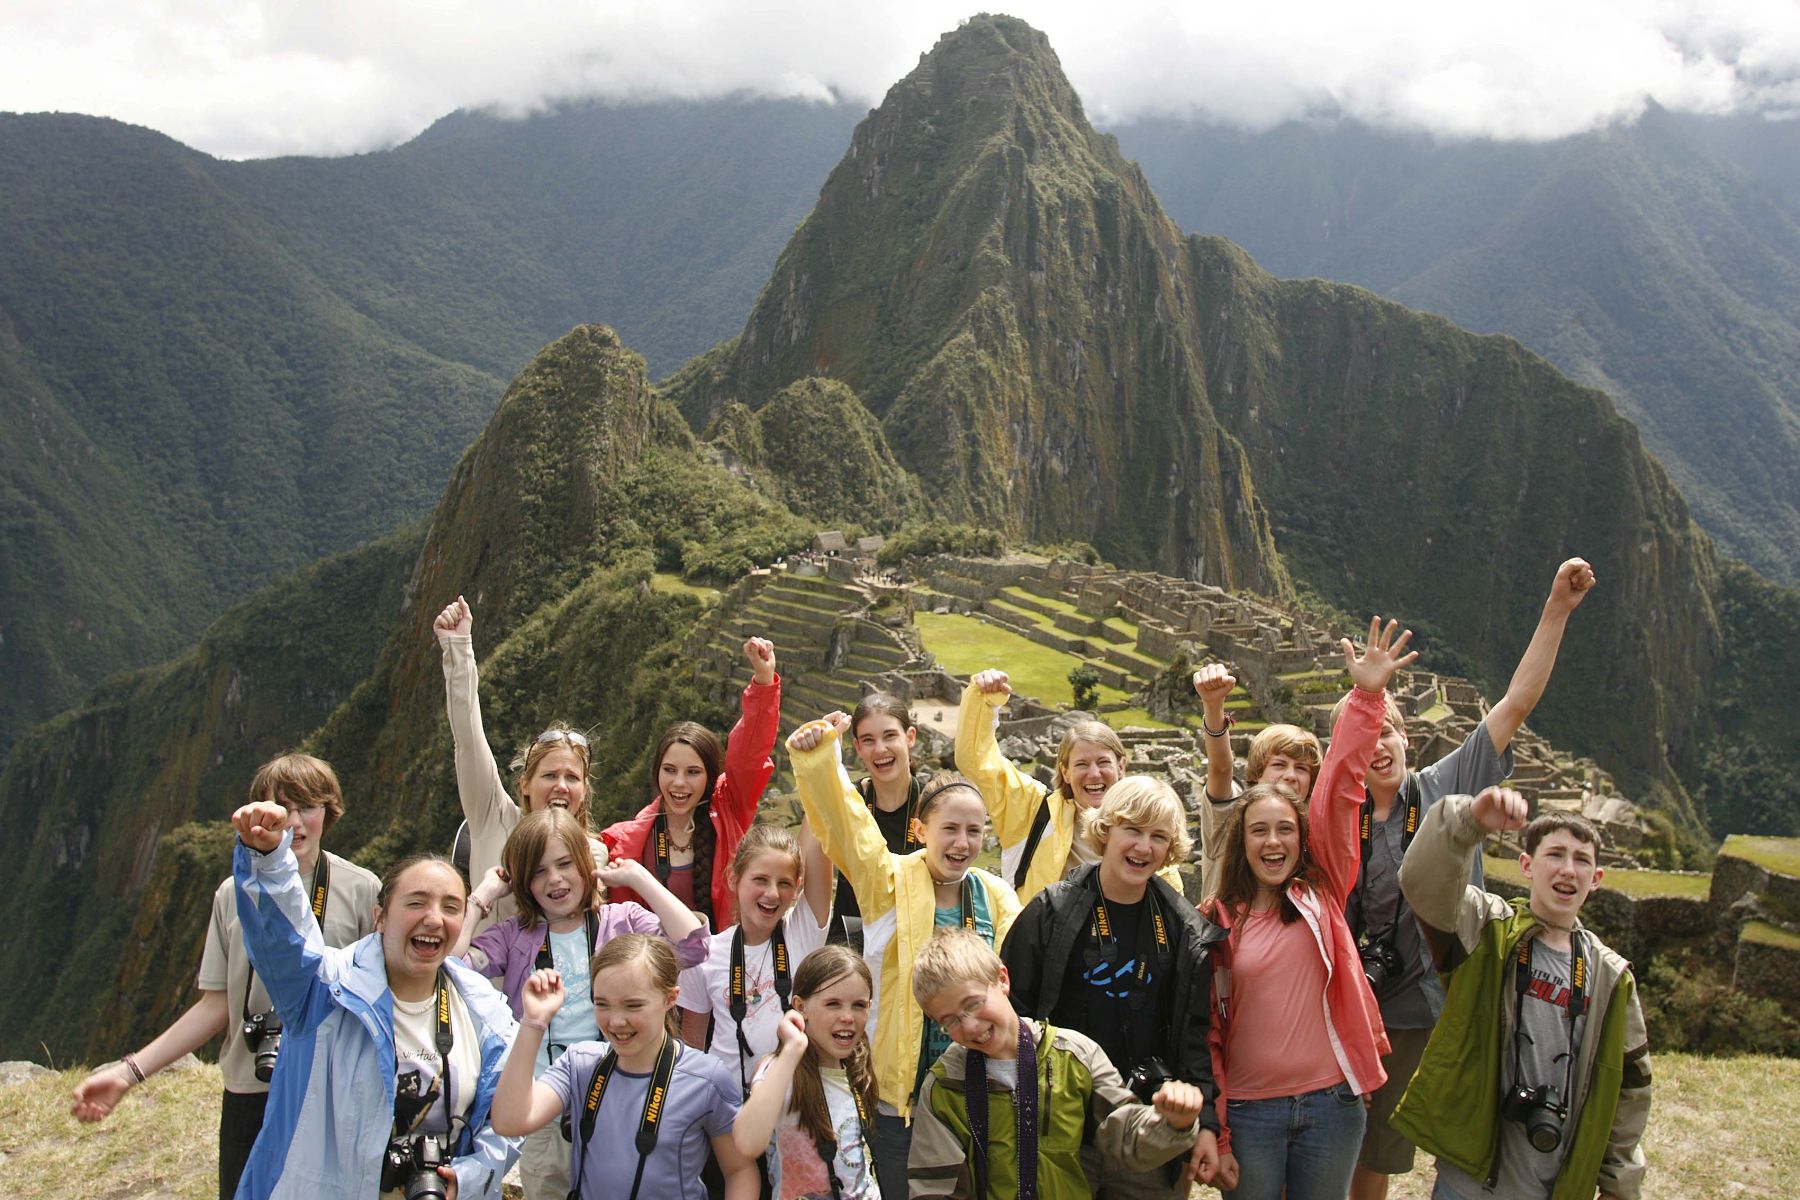 В группе 60 туристов. Мачу-Пикчу Перу туристы. Мачу Пикчу туристы. Мачу Пикчу туризм. Мачу Пикчу народ коренной.